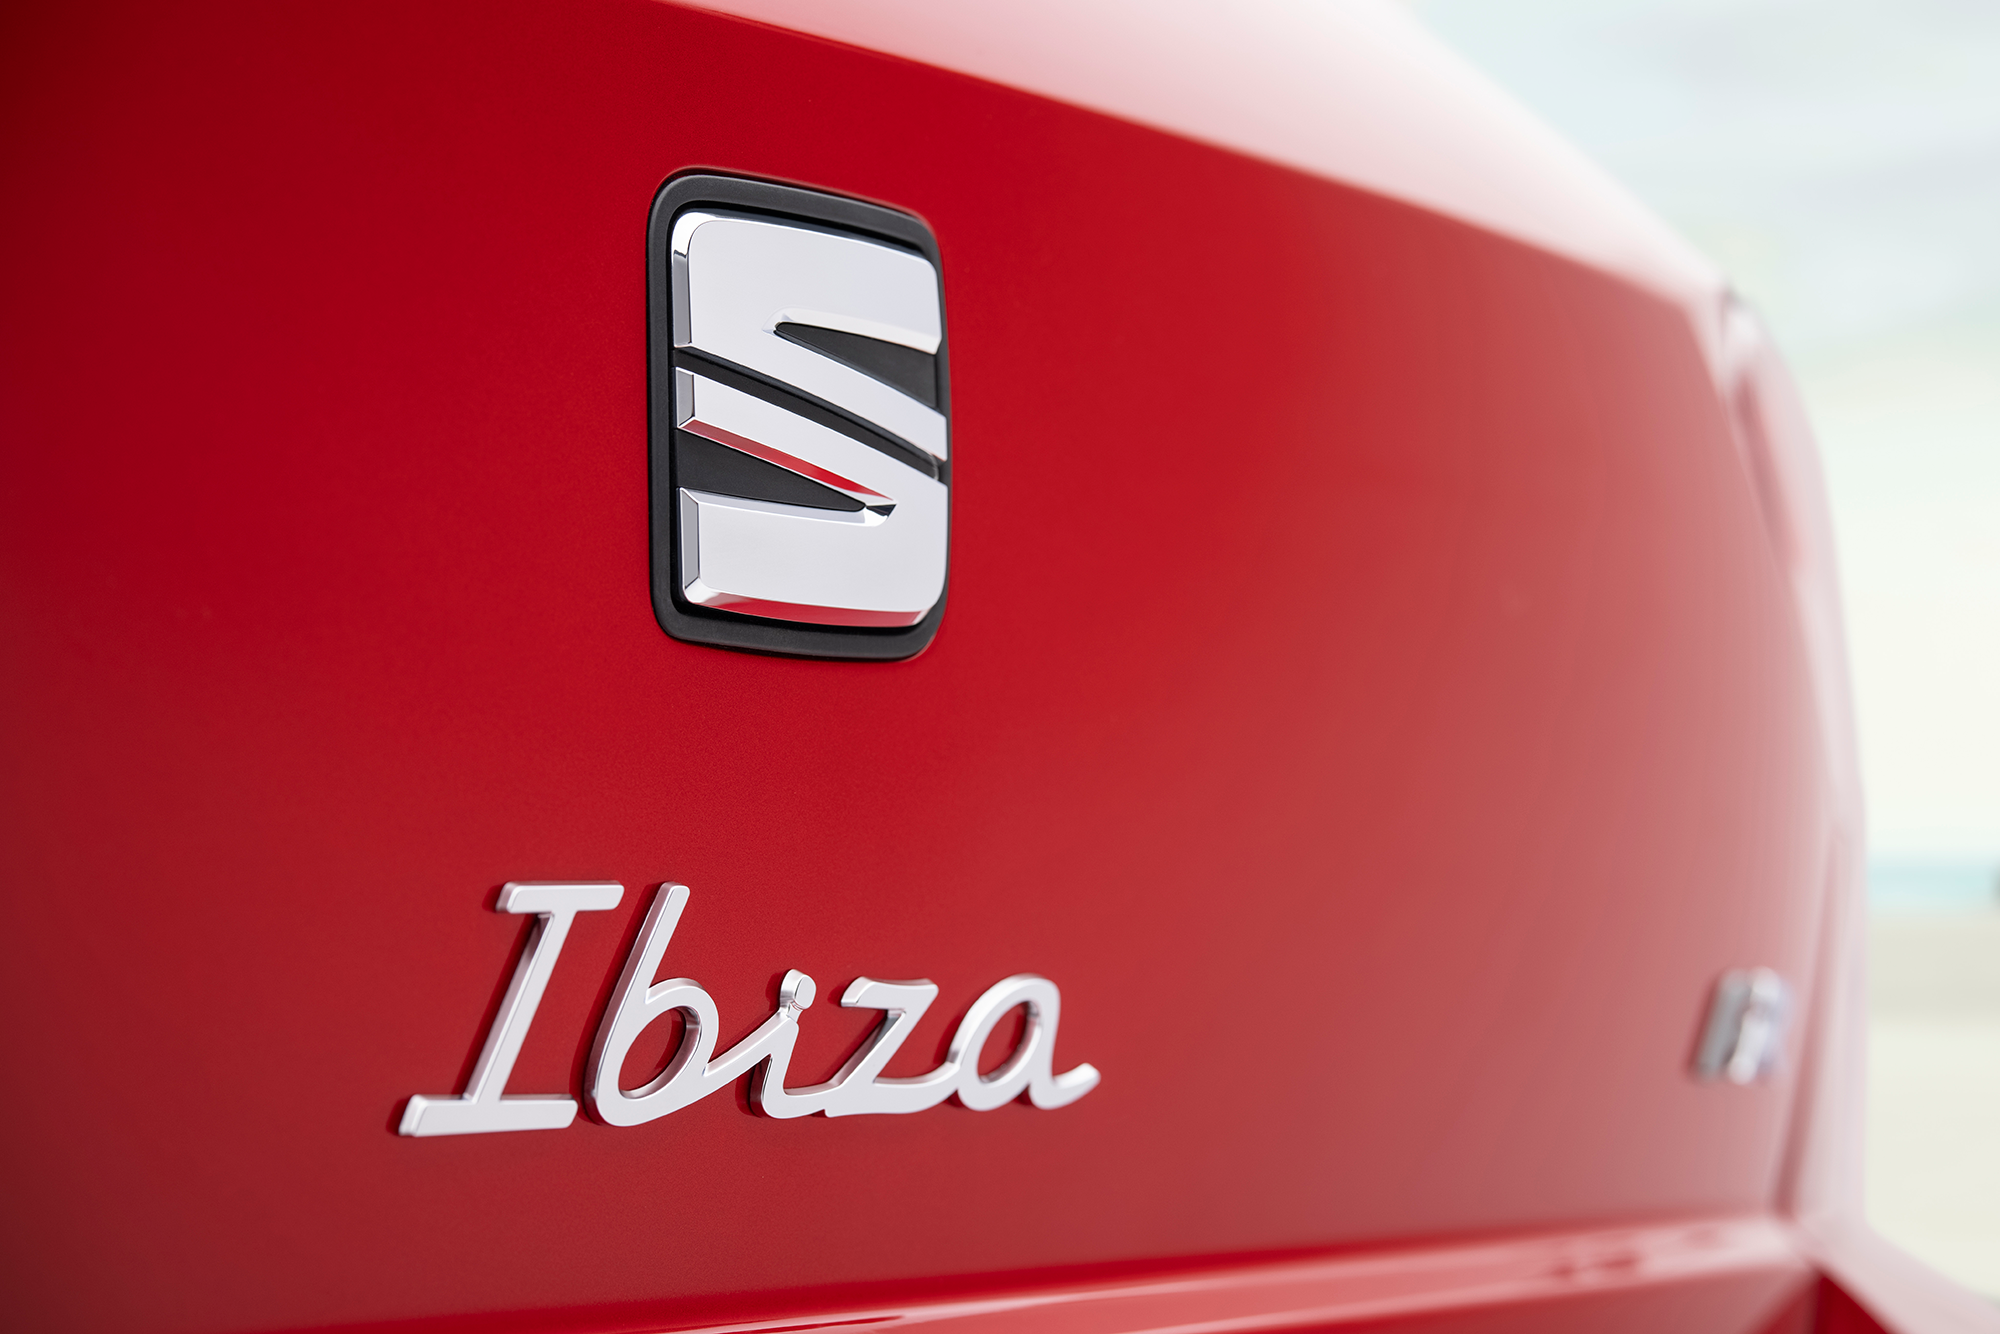 De vernieuwde Ibiza